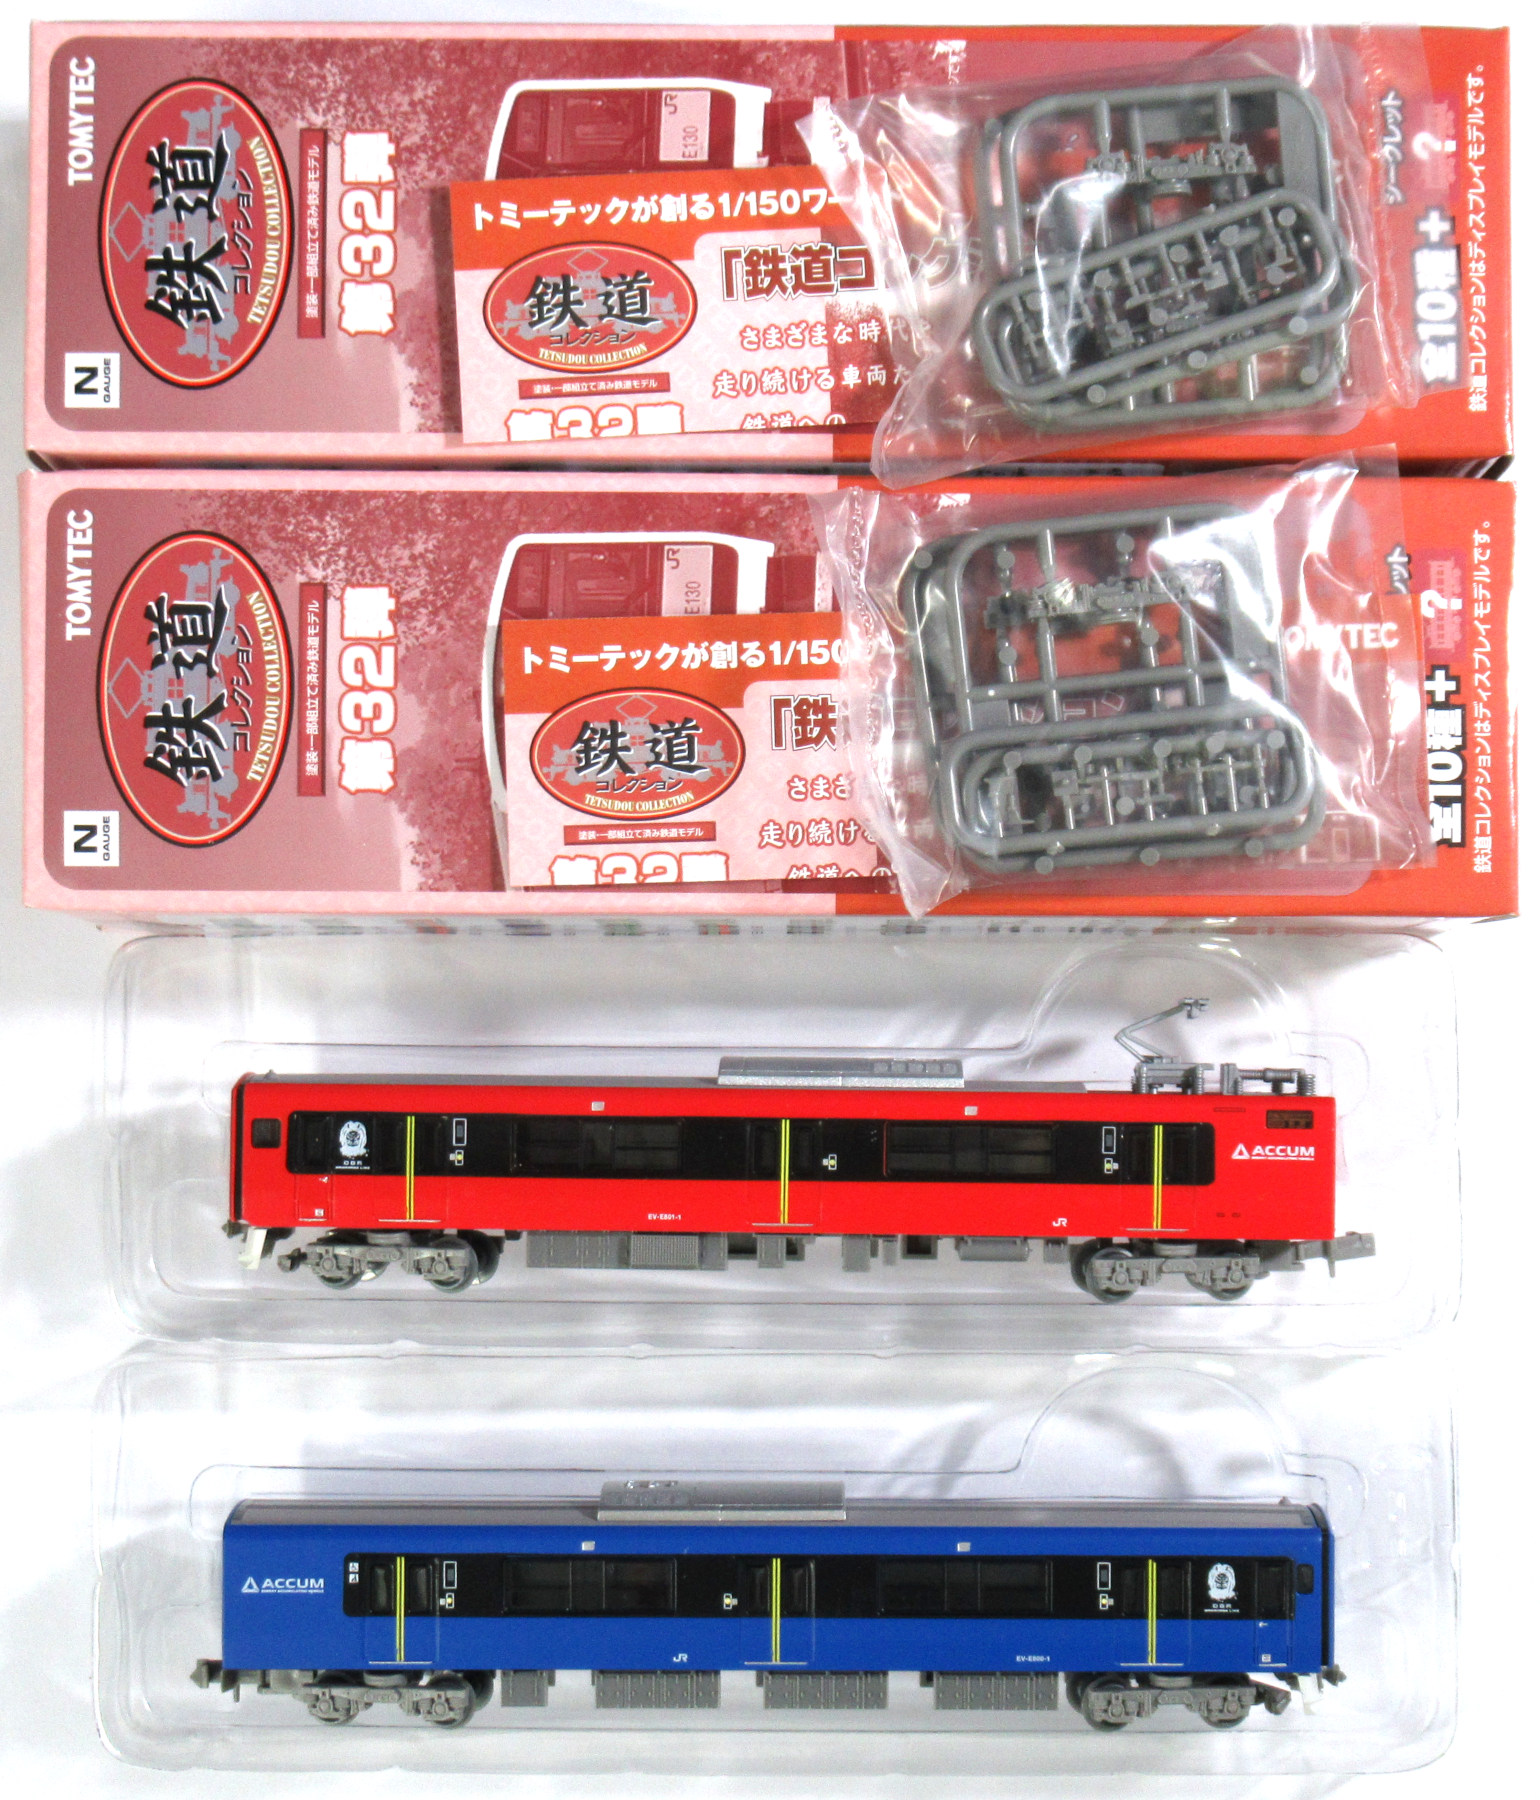 公式]鉄道模型((1996-1997) 鉄道コレクション 第32弾 JR東日本 EV-E801